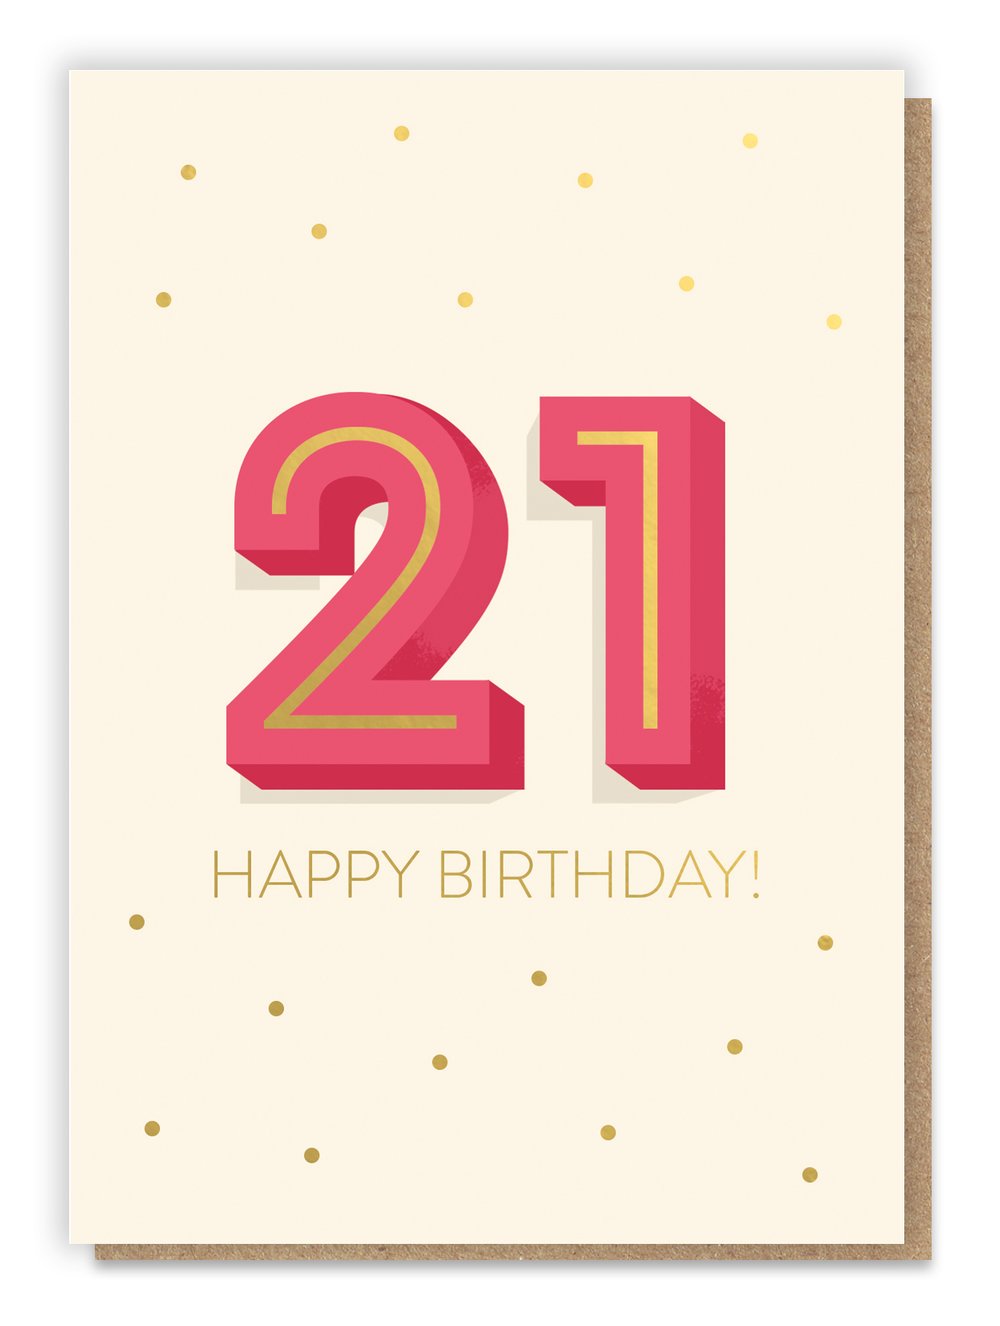 Big 2-1 Birthday Card - Age 21